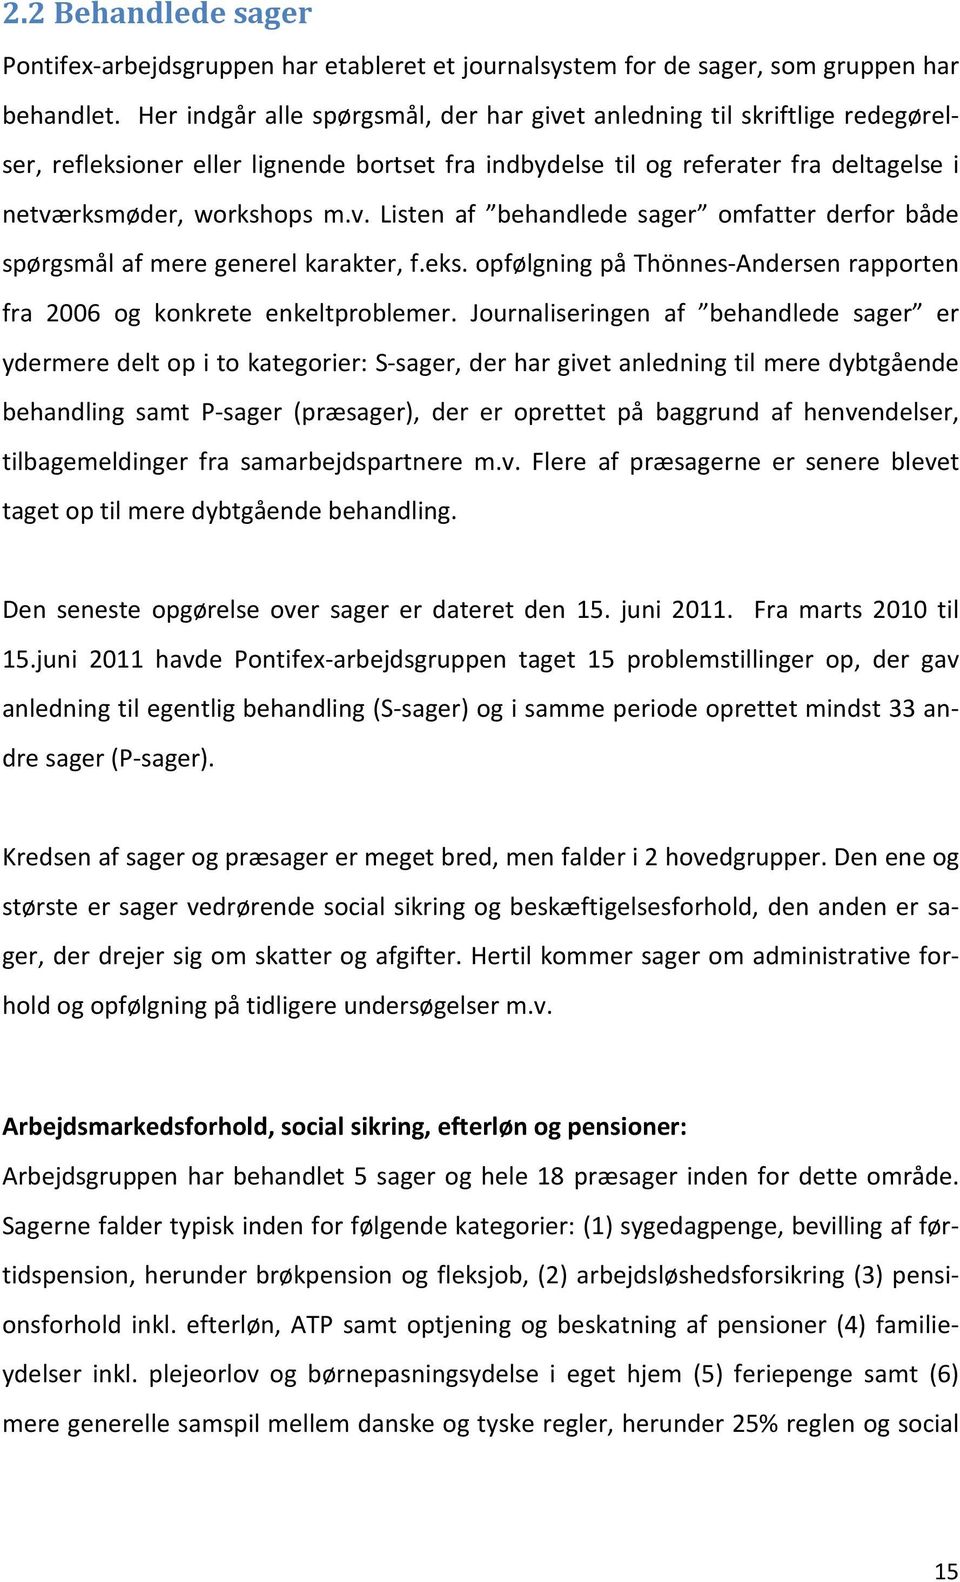 eks. opfølgning på Thönnes-Andersen rapporten fra 2006 og konkrete enkeltproblemer.